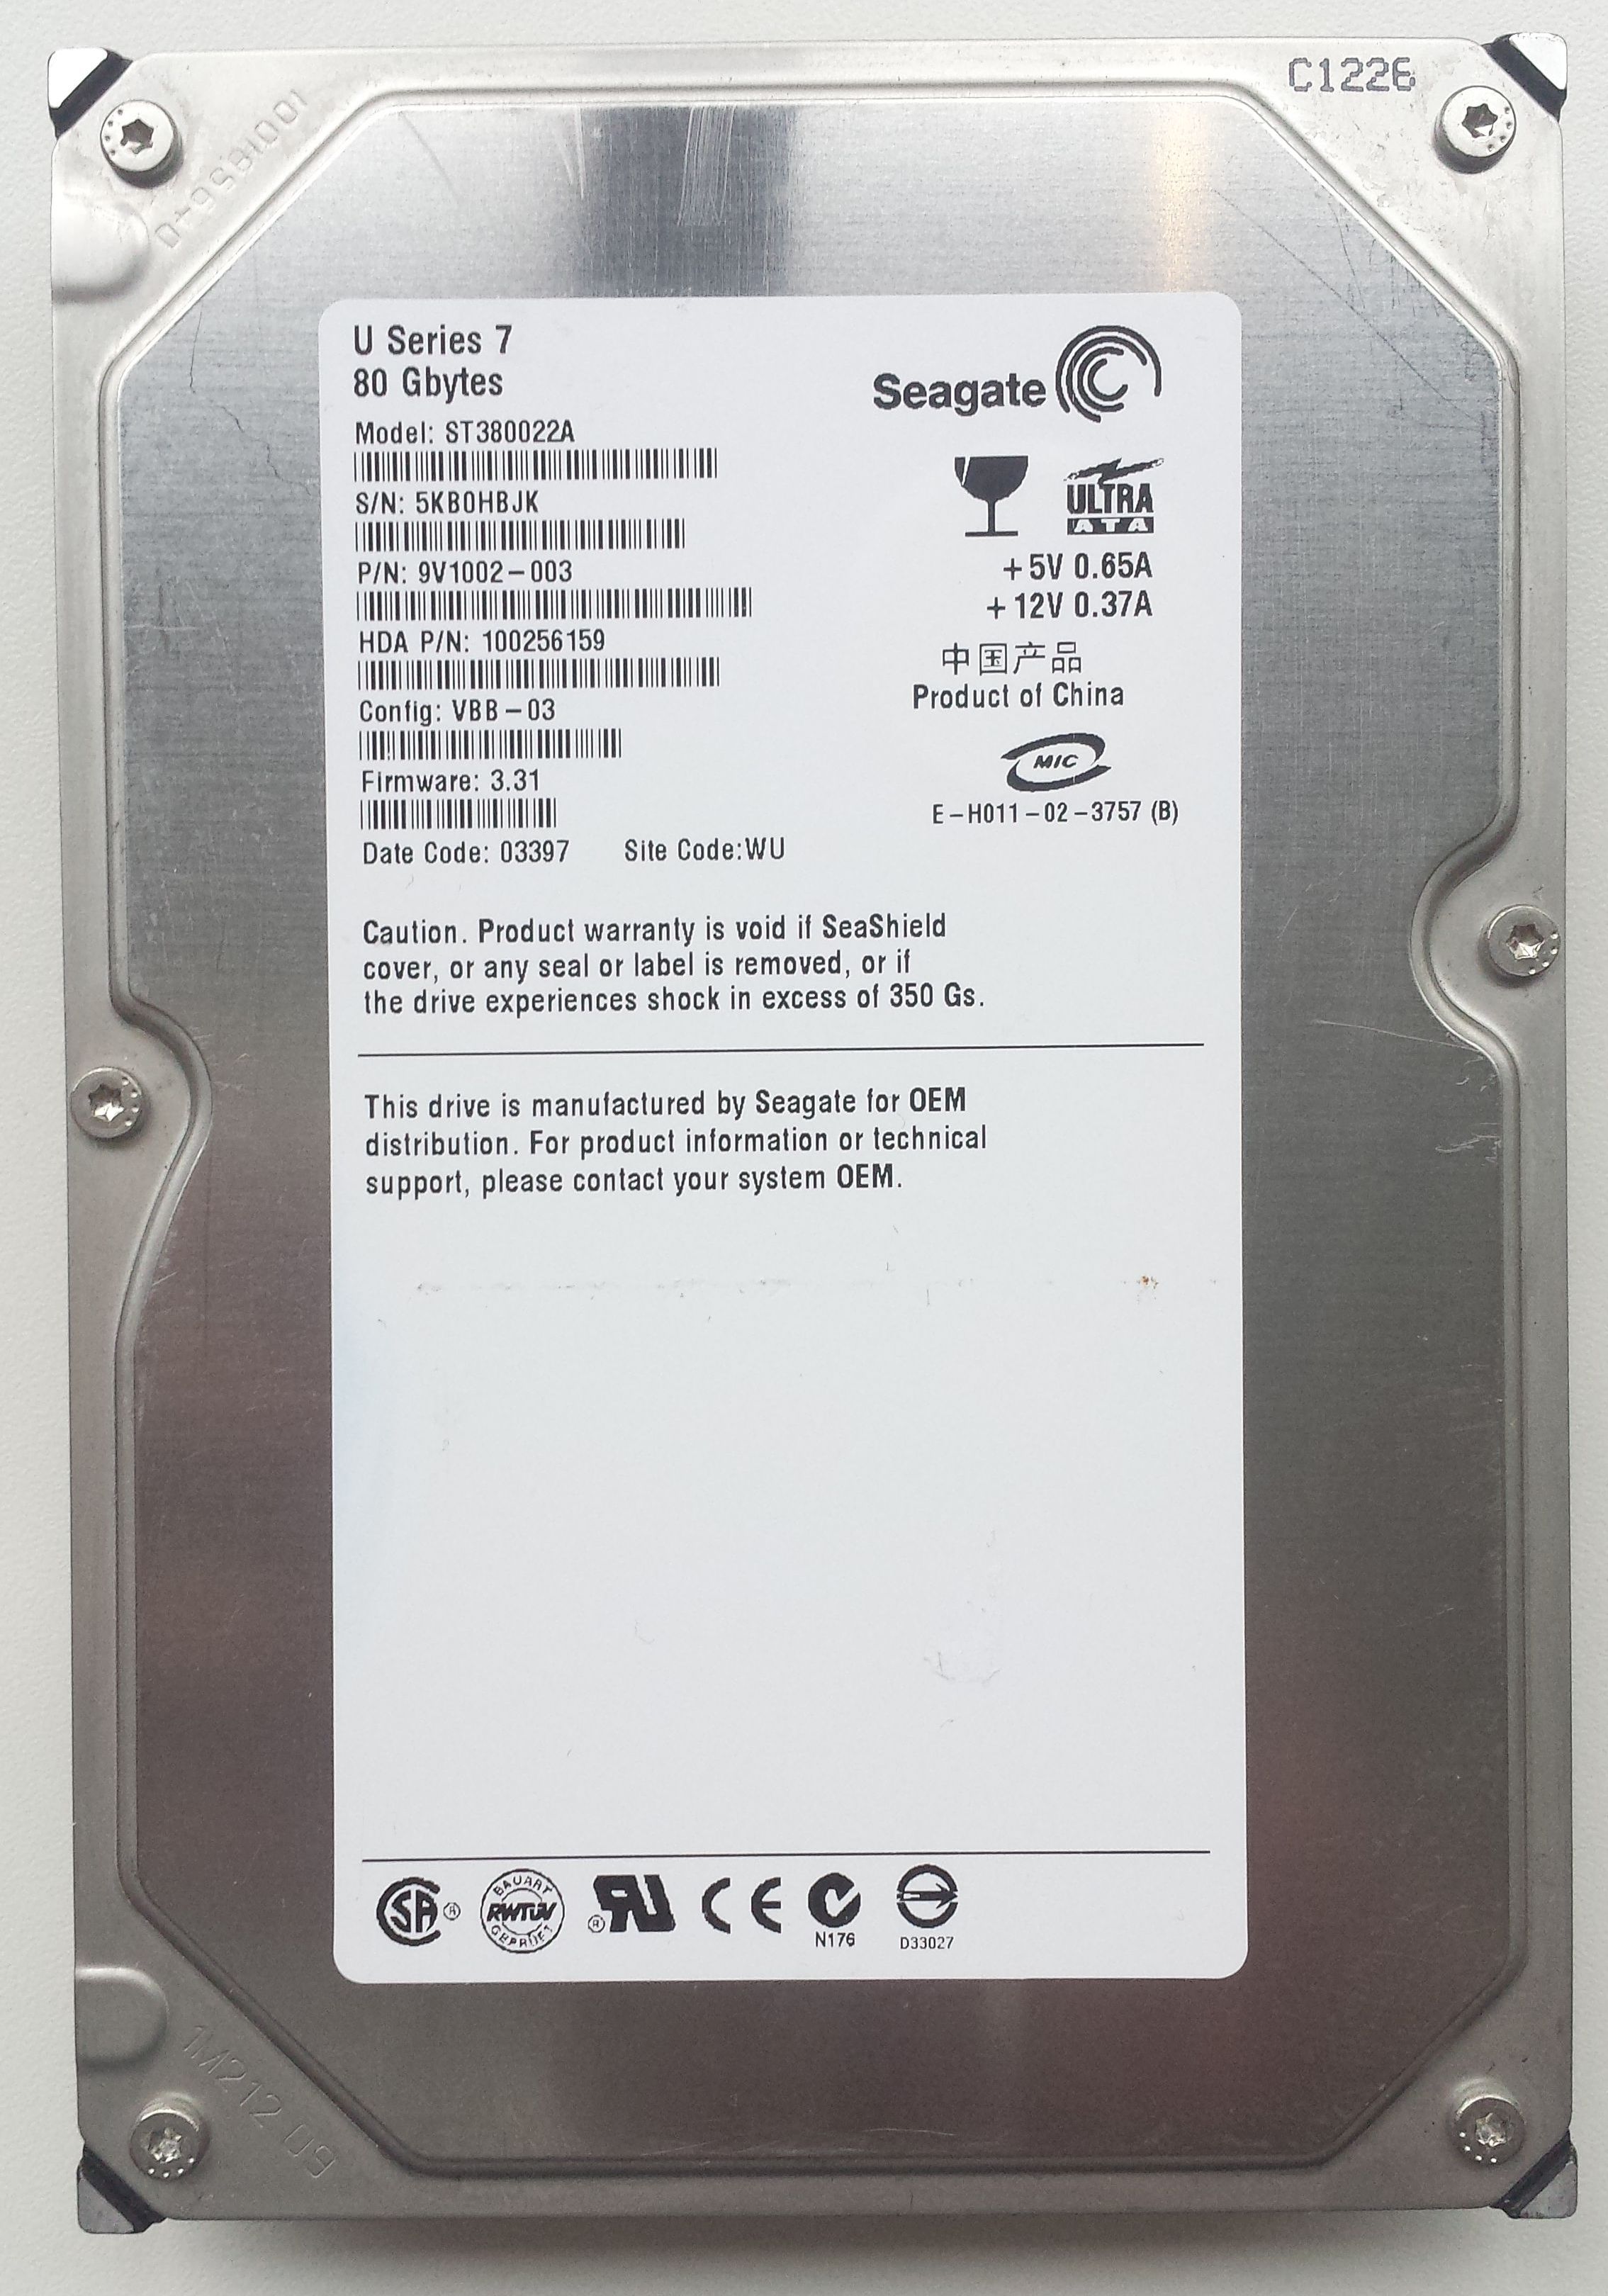 HDD PATA/100 3.5" 80GB / Seagate U Series 7 (ST380022A)